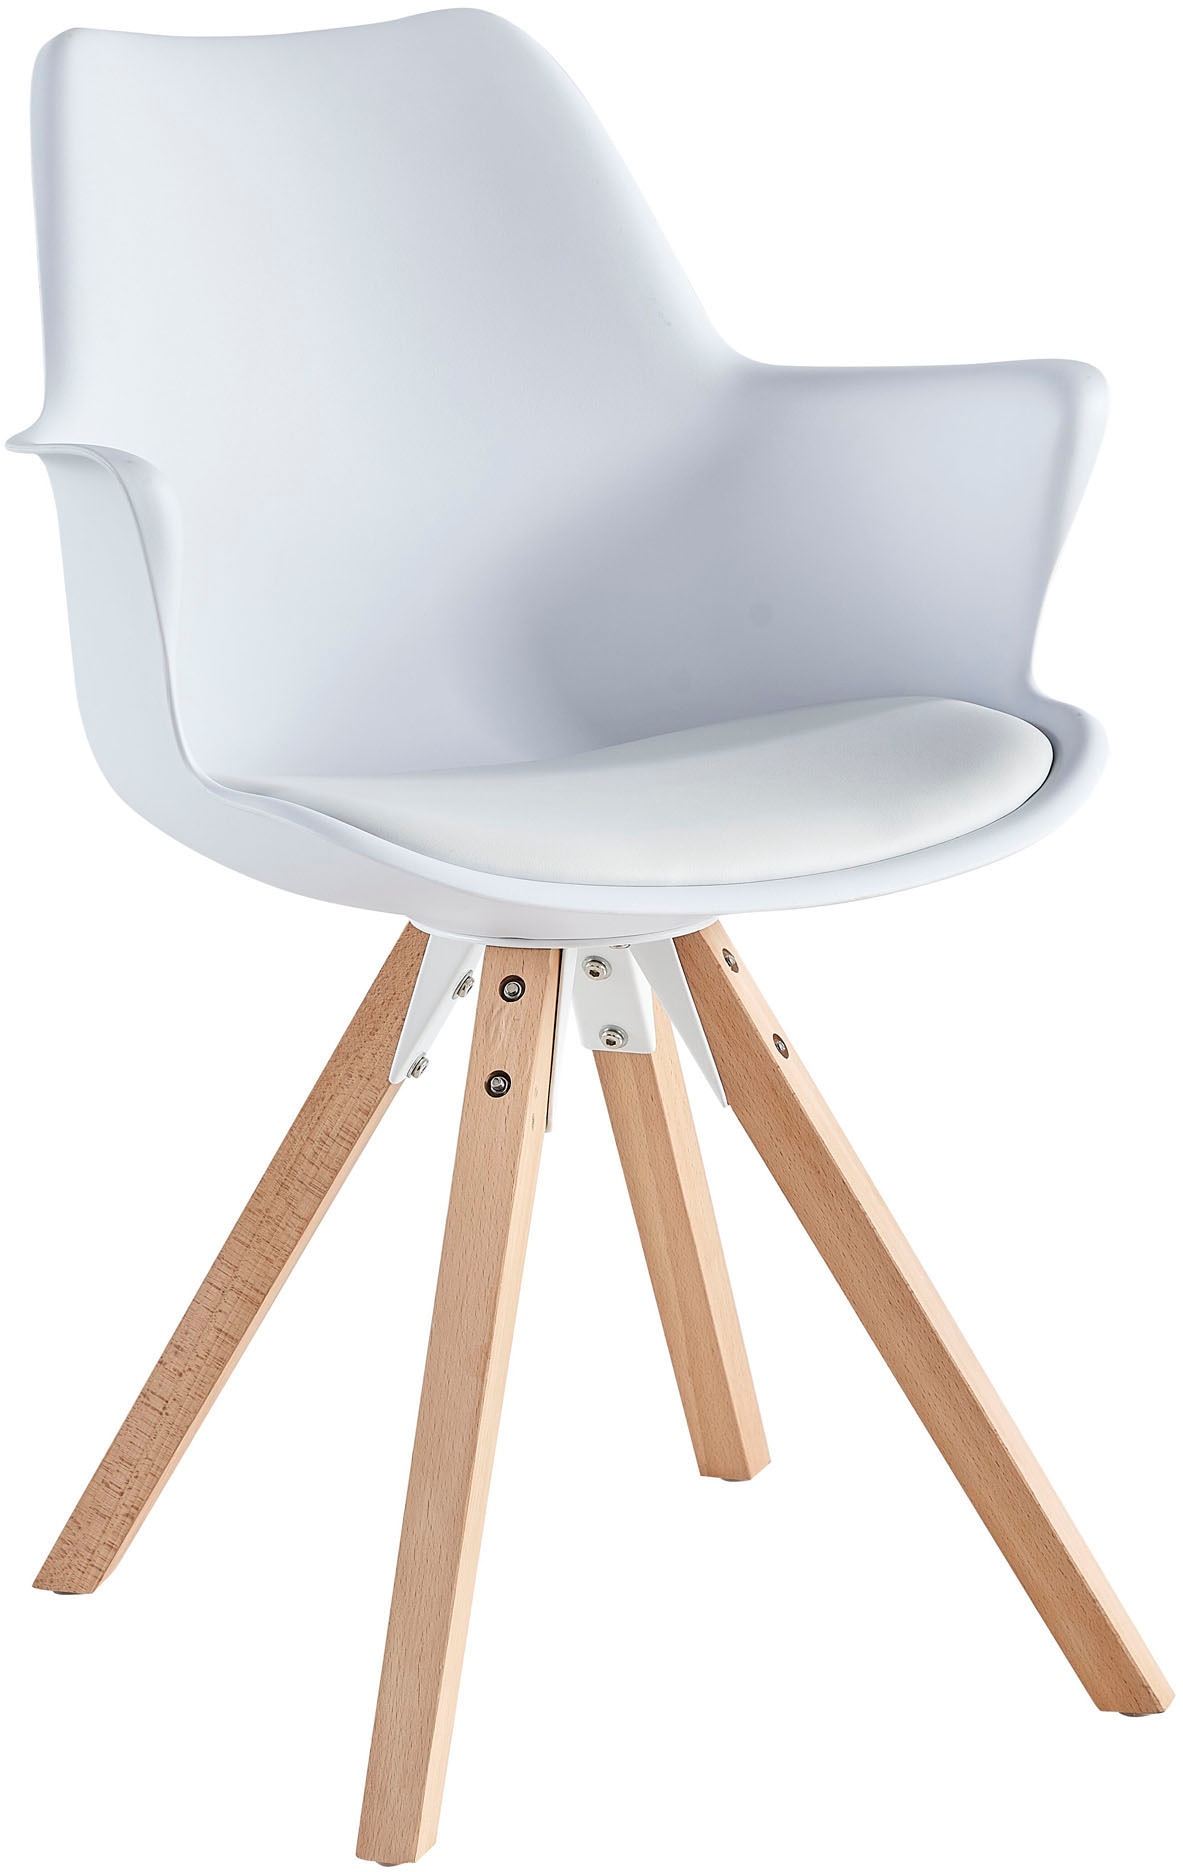 SalesFever Armlehnstuhl, (Set), 2 St., Sitzfläche aus Kunstleder